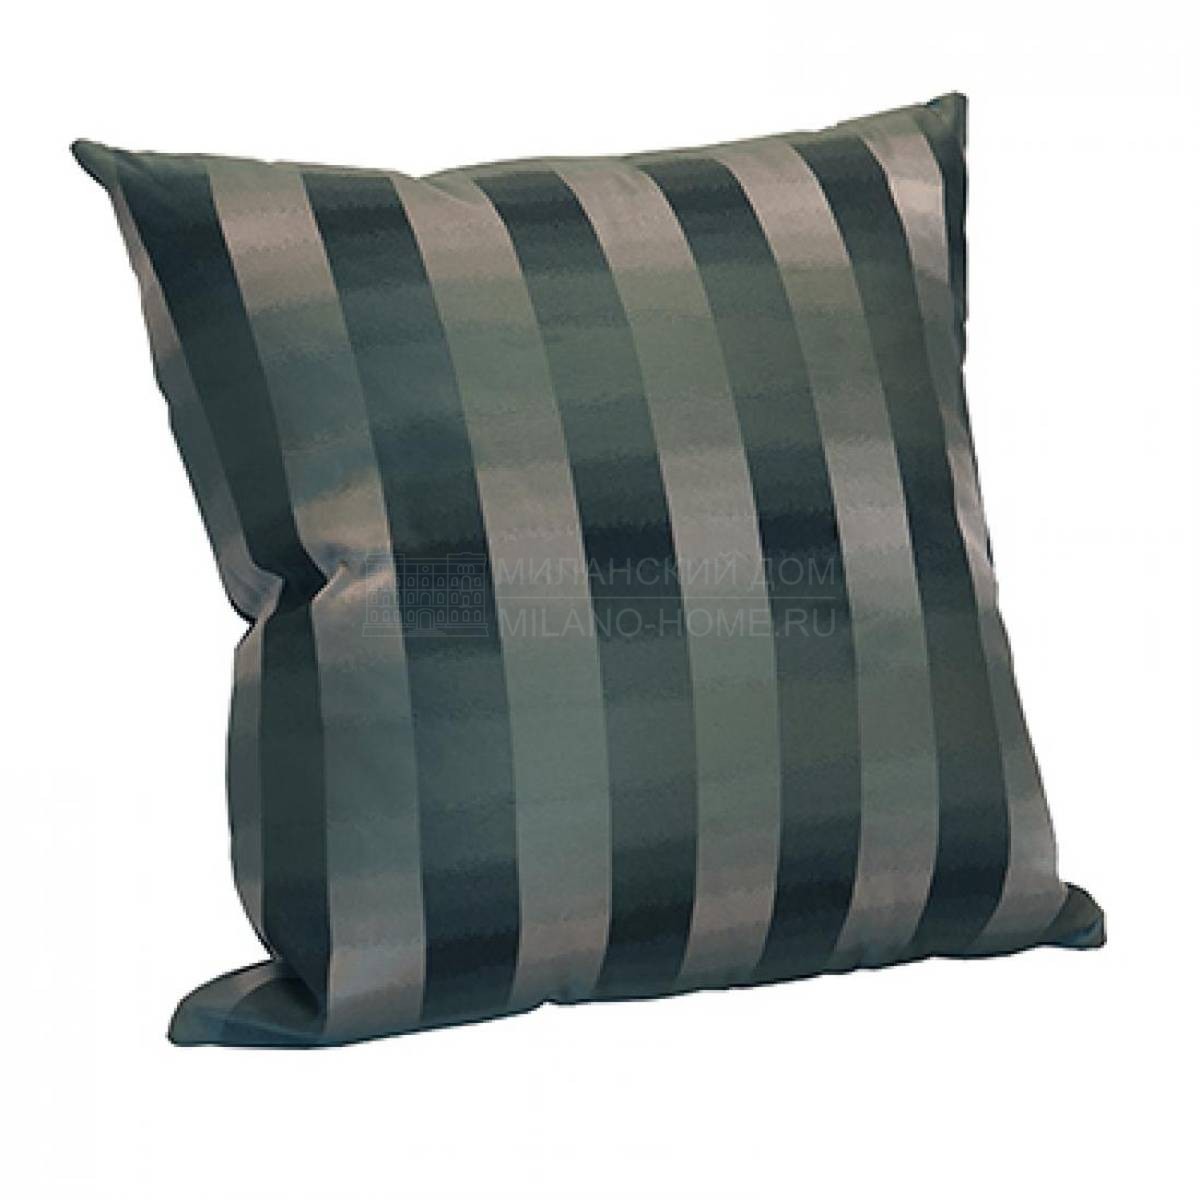 Декоративная подушка Pillow из Италии фабрики RUBELLI Casa